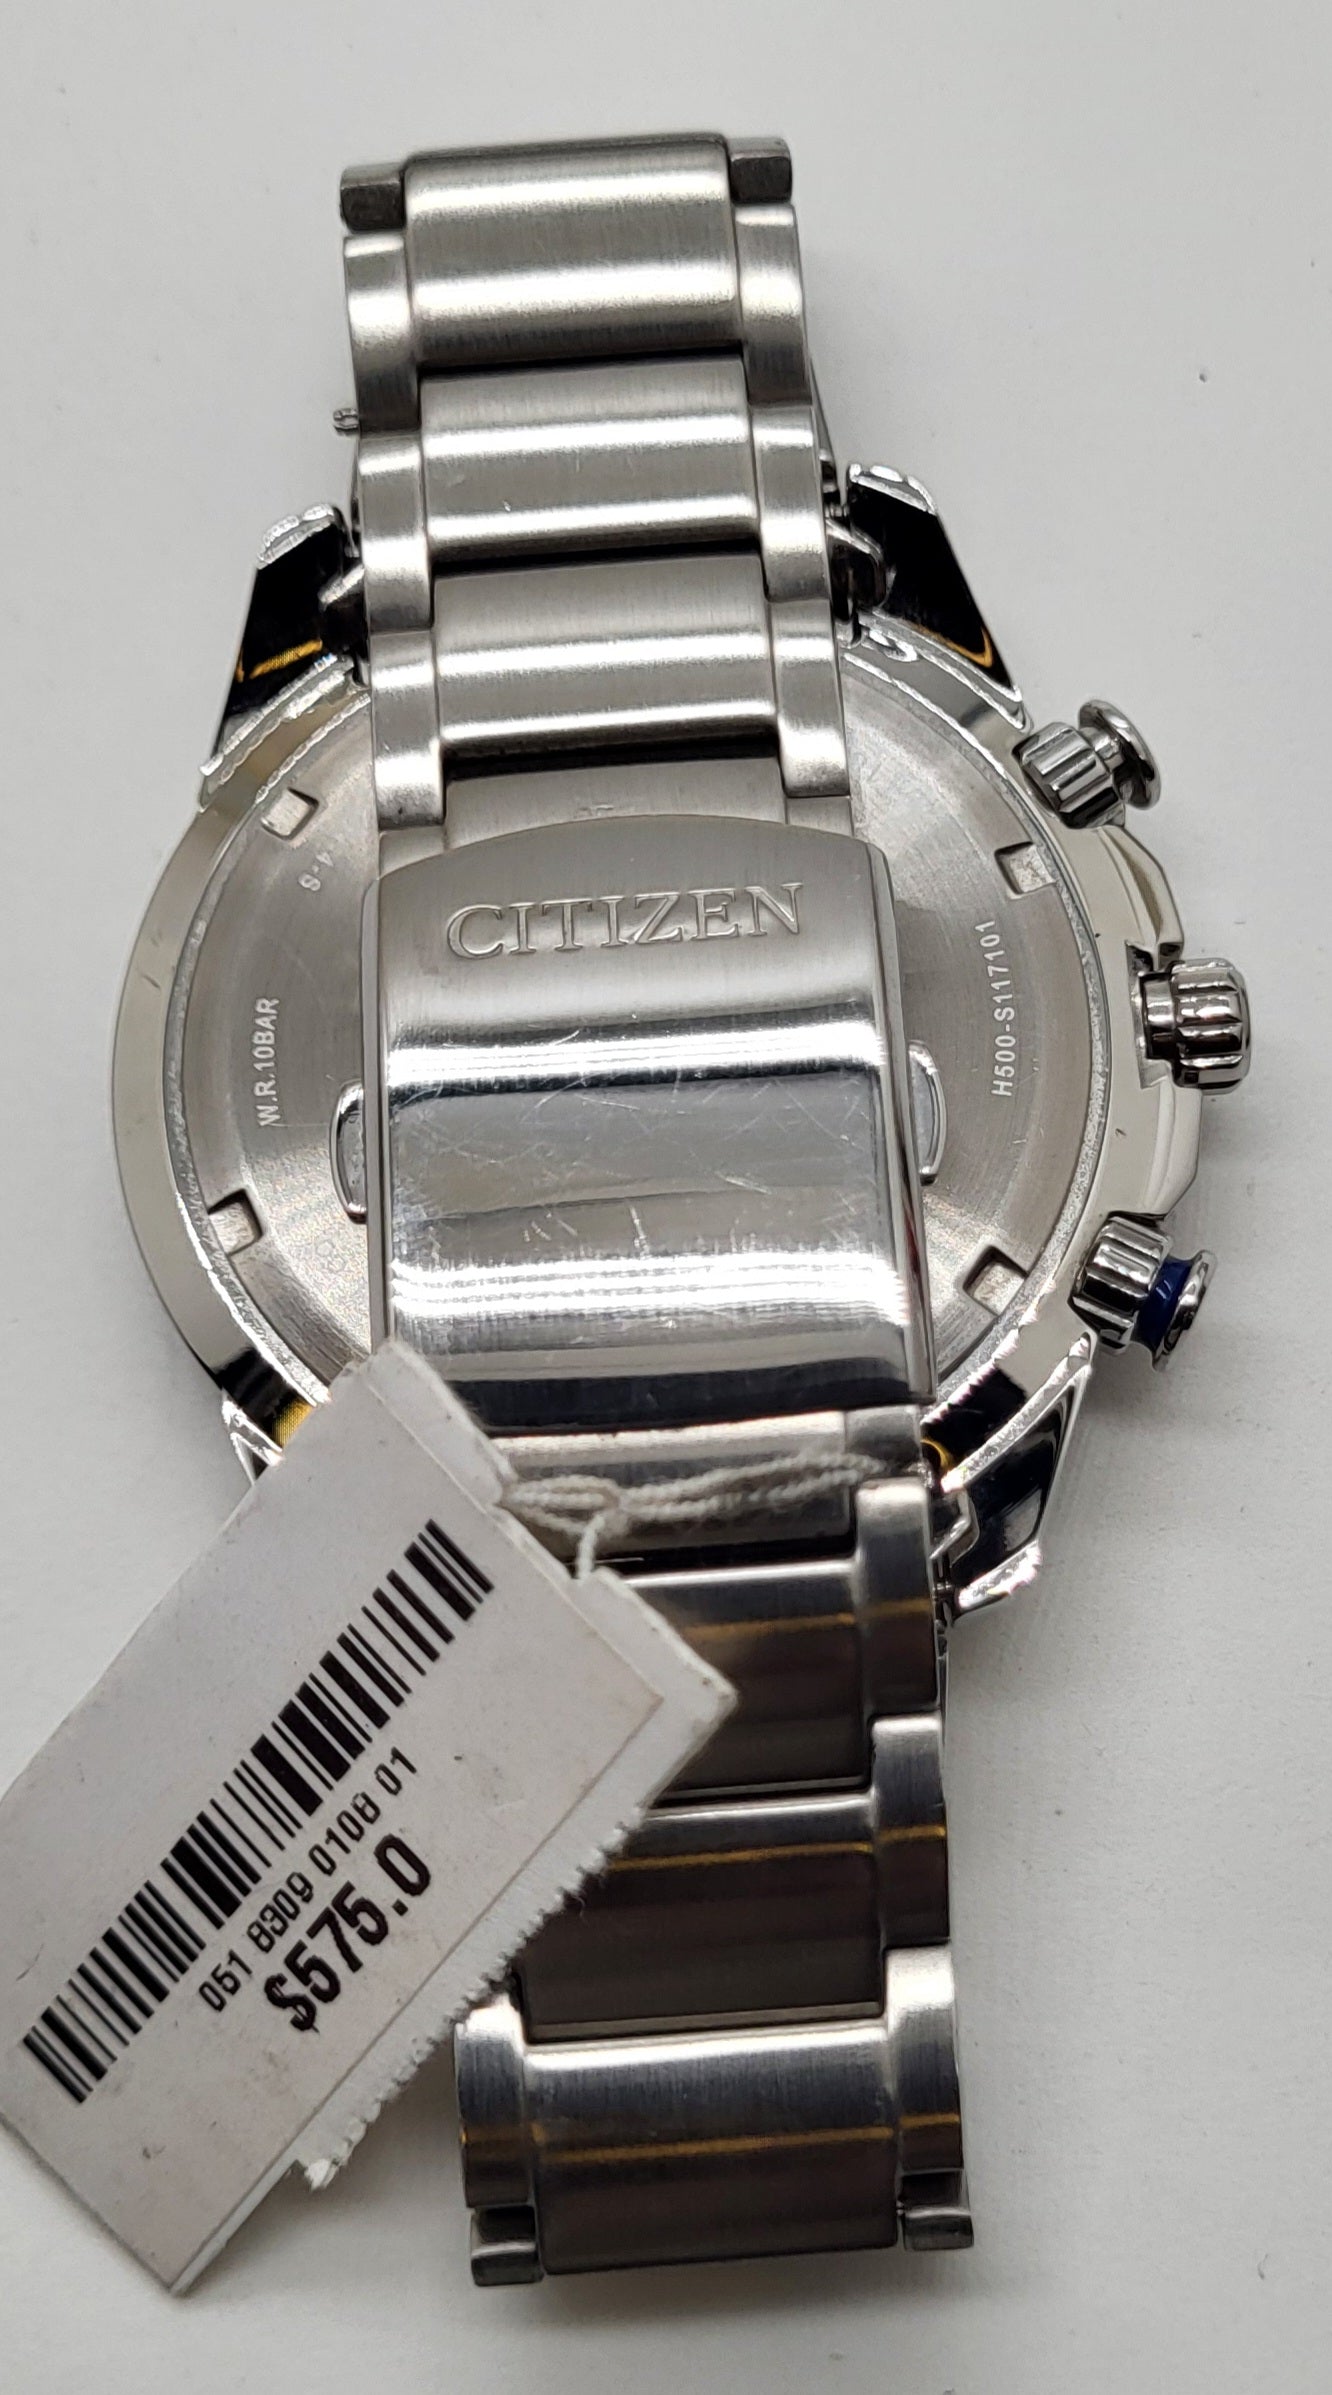 Citizen Eco-Drive Weekender, Stainless Steel Men's Quartz Watch - AT2440-51L